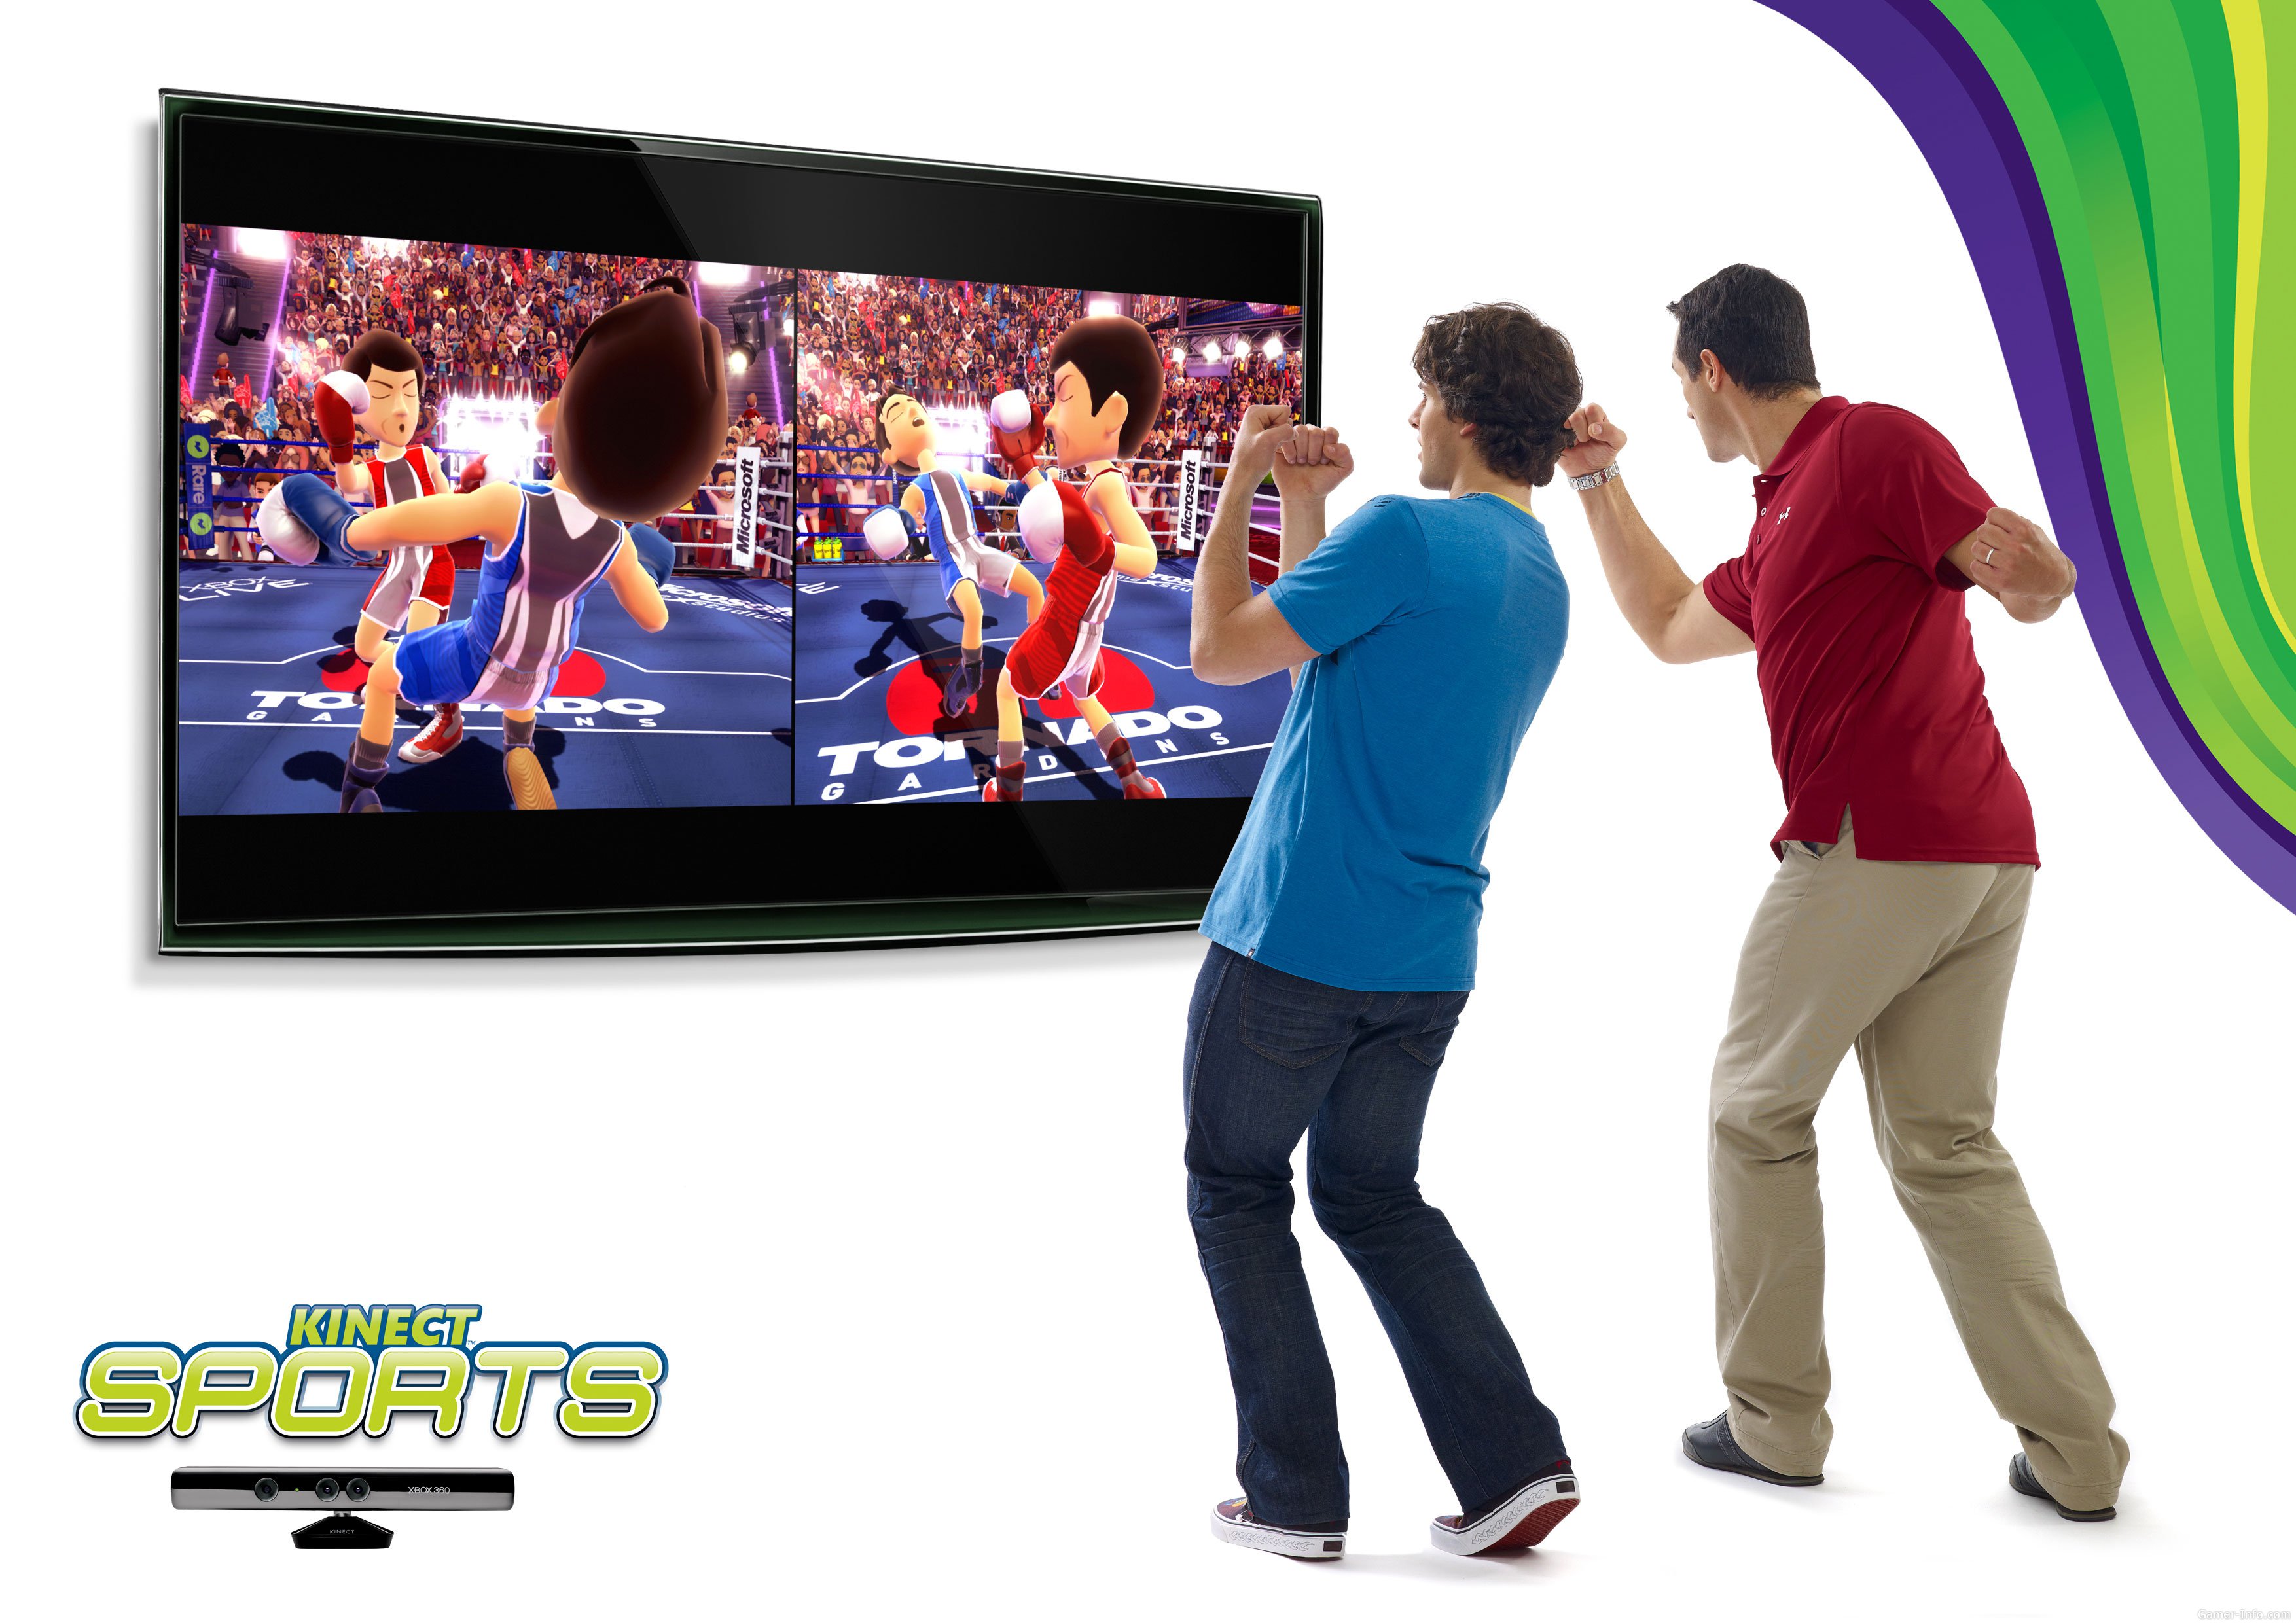 Играть игры через телевизор. Xbox 360 Kinect. Кинект спорт для Xbox 360. Сенсор кинект для Xbox 360 Sport. Xbox 360 камера Kinect.